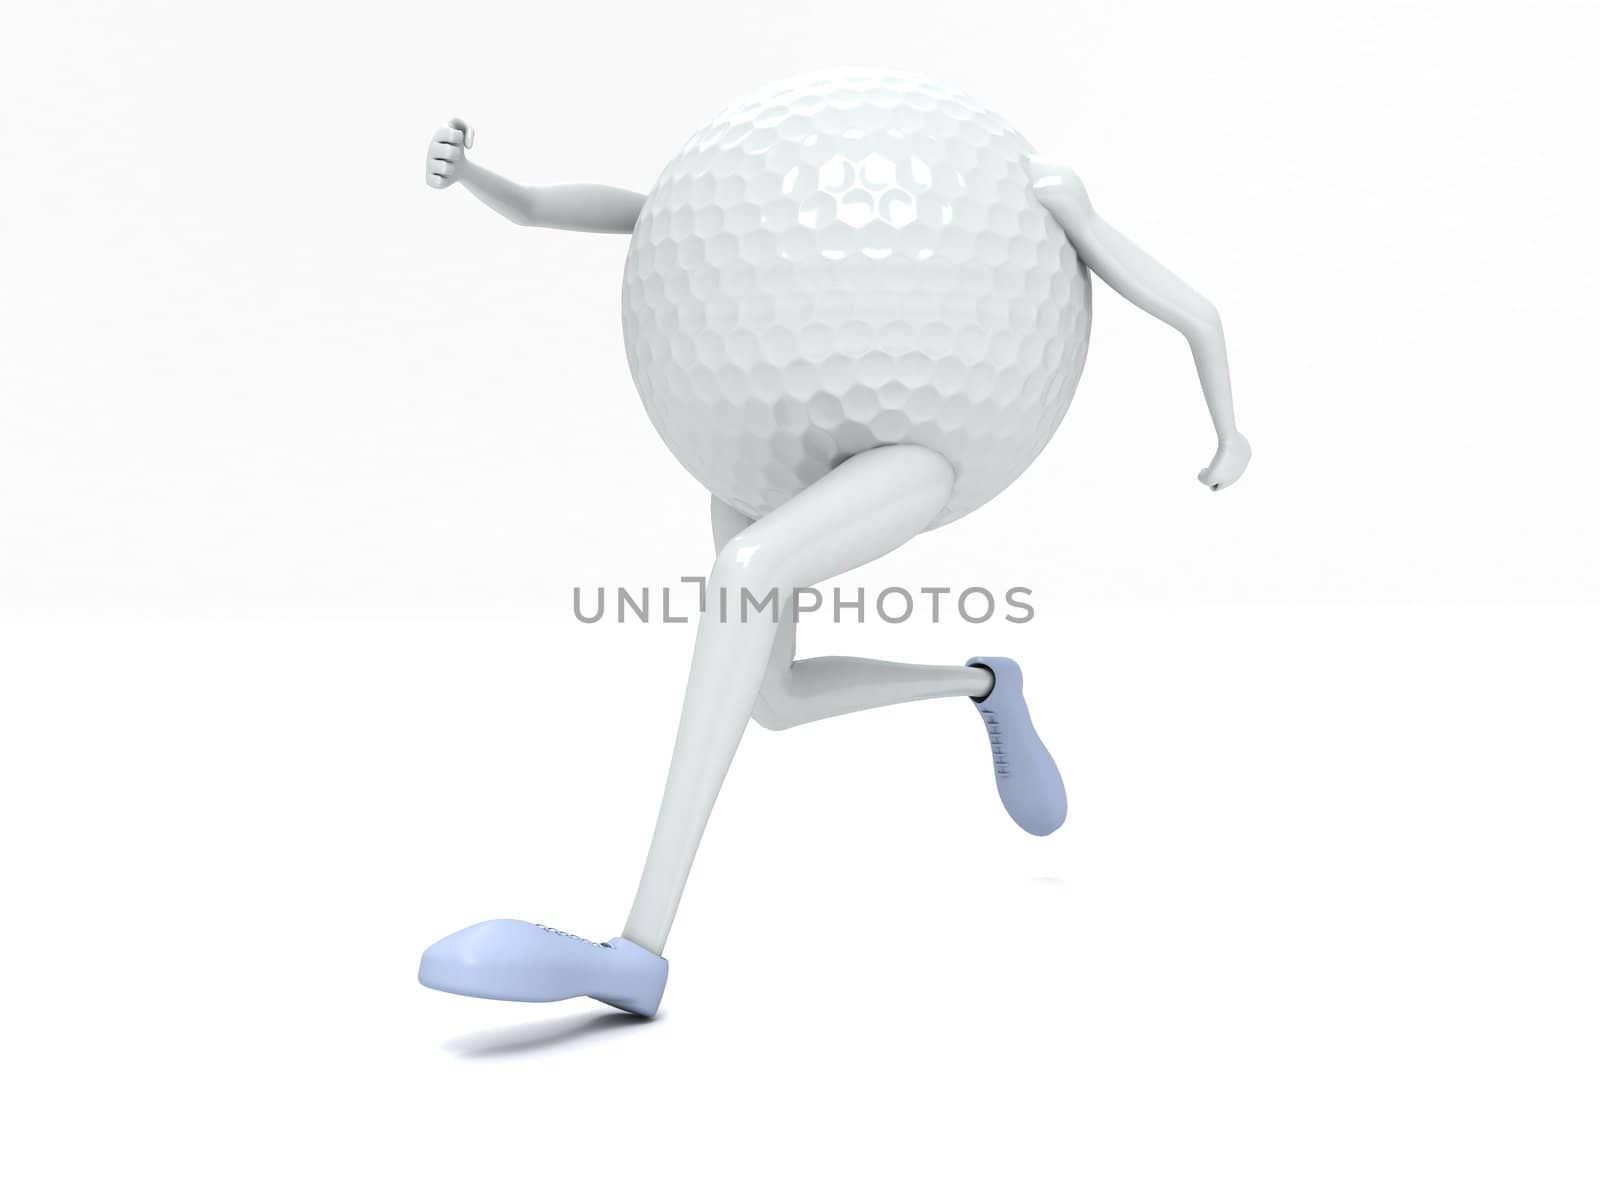 three dimensional view of running golf ball


